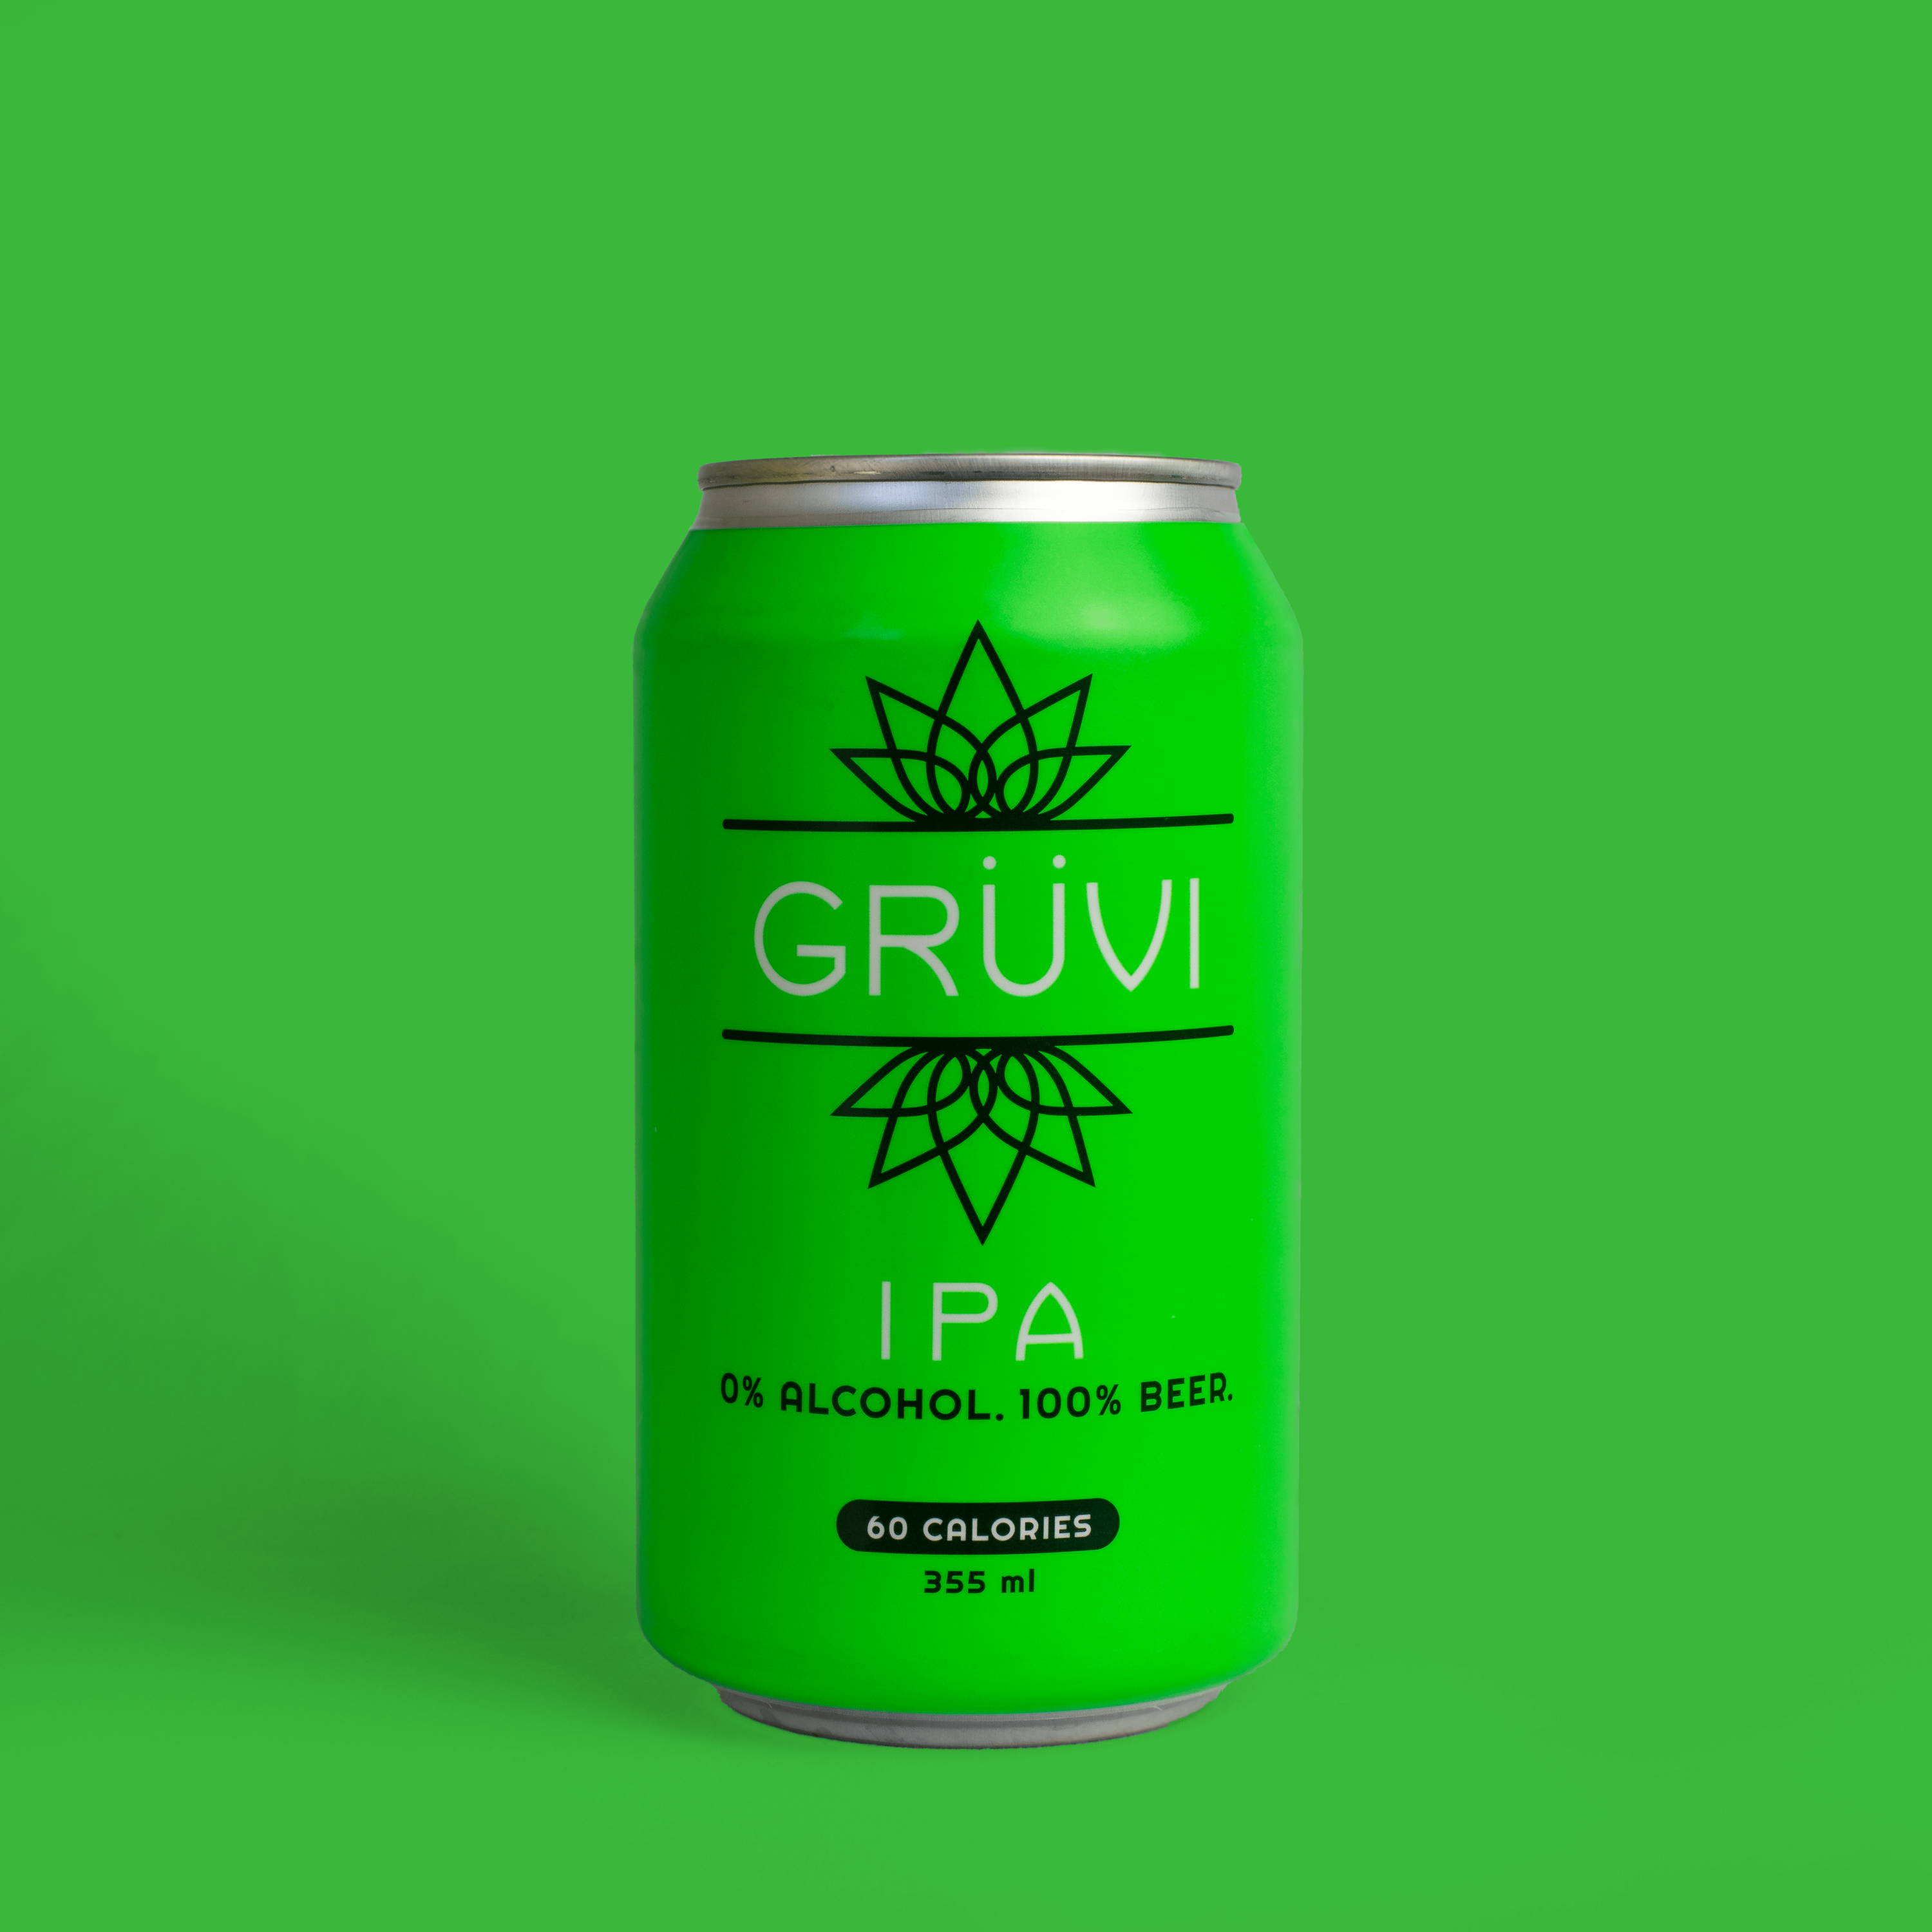 Gruvi IPA product shot on green background